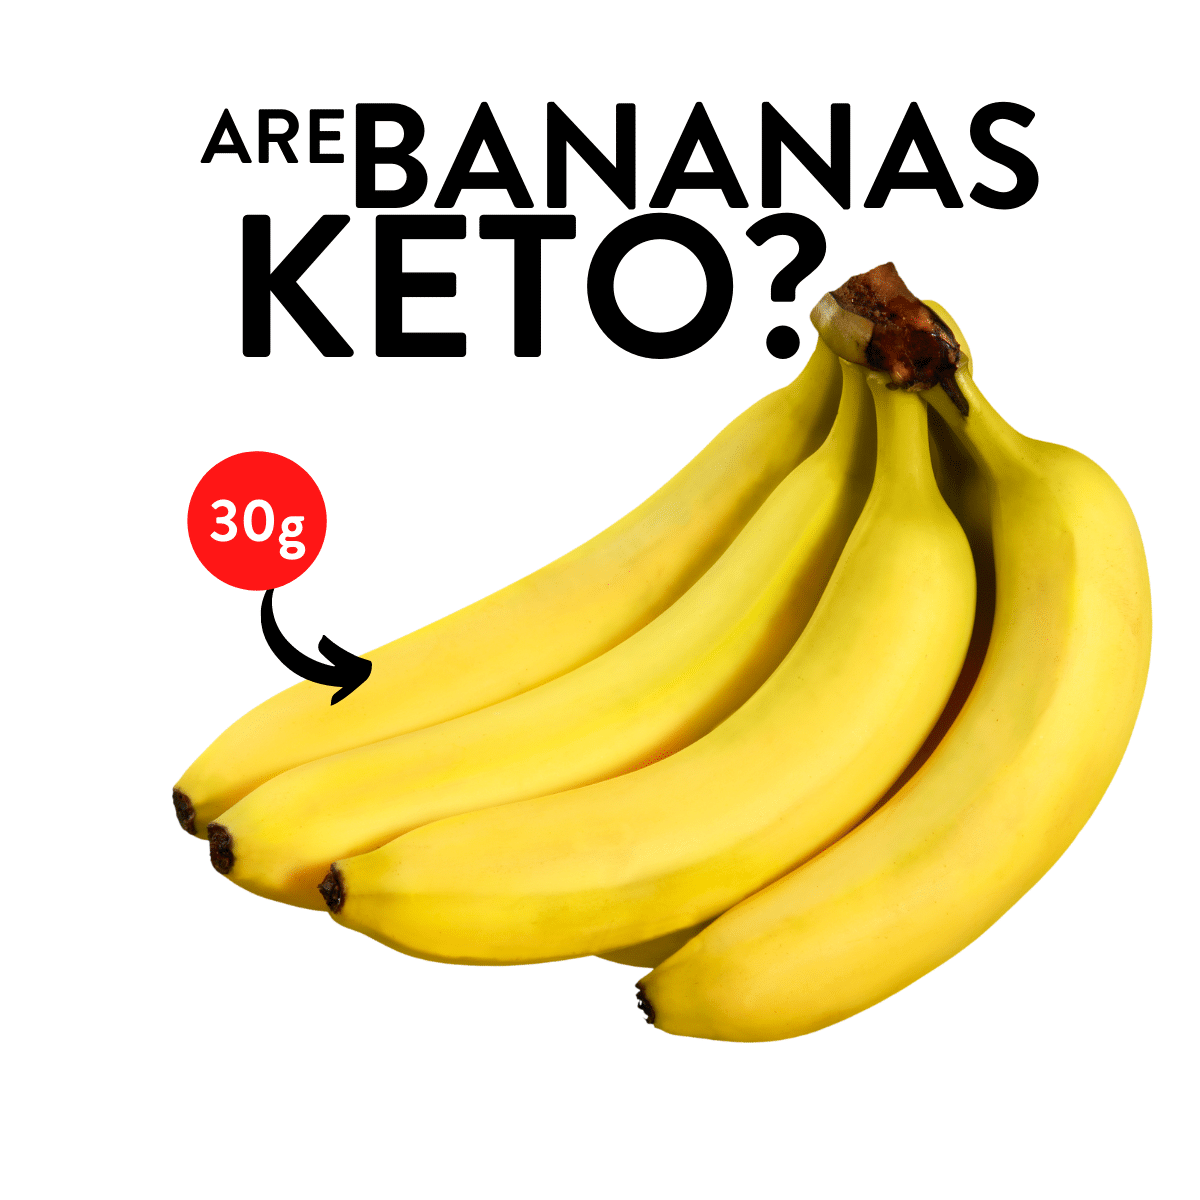 Are Bananas Keto? Counting The Carbs In Bananas - Sweet As Honey